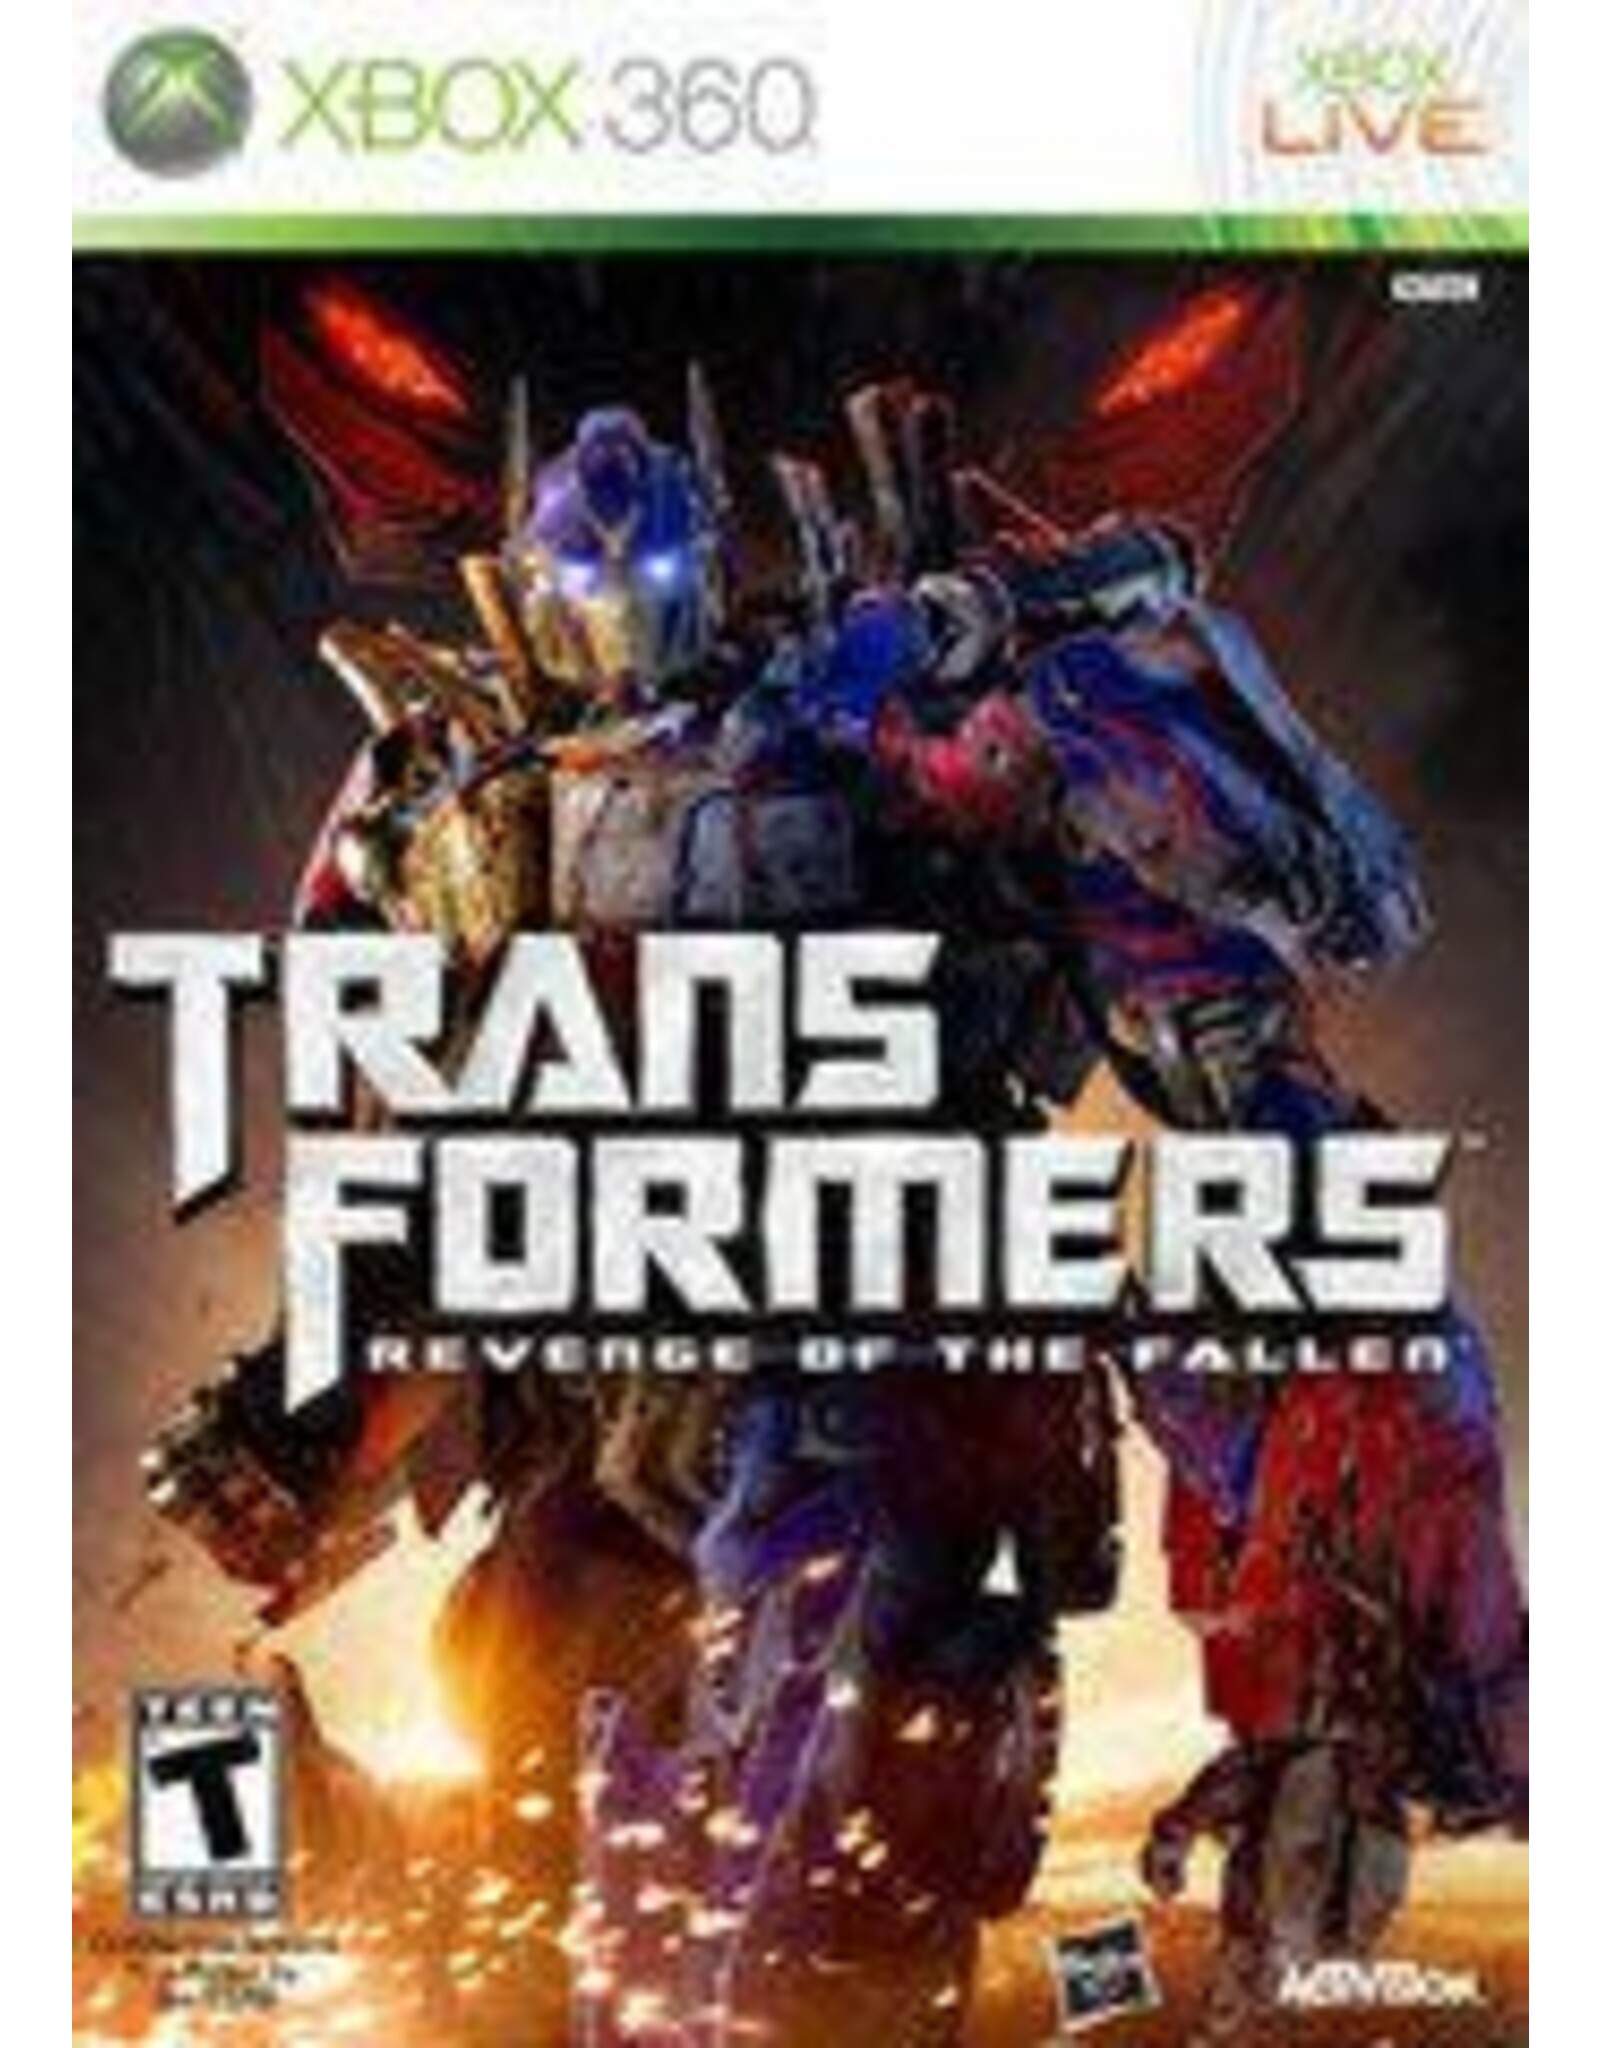 Xbox 360 Transformers: Revenge of the Fallen (CiB, Damaged Insert & Manual)